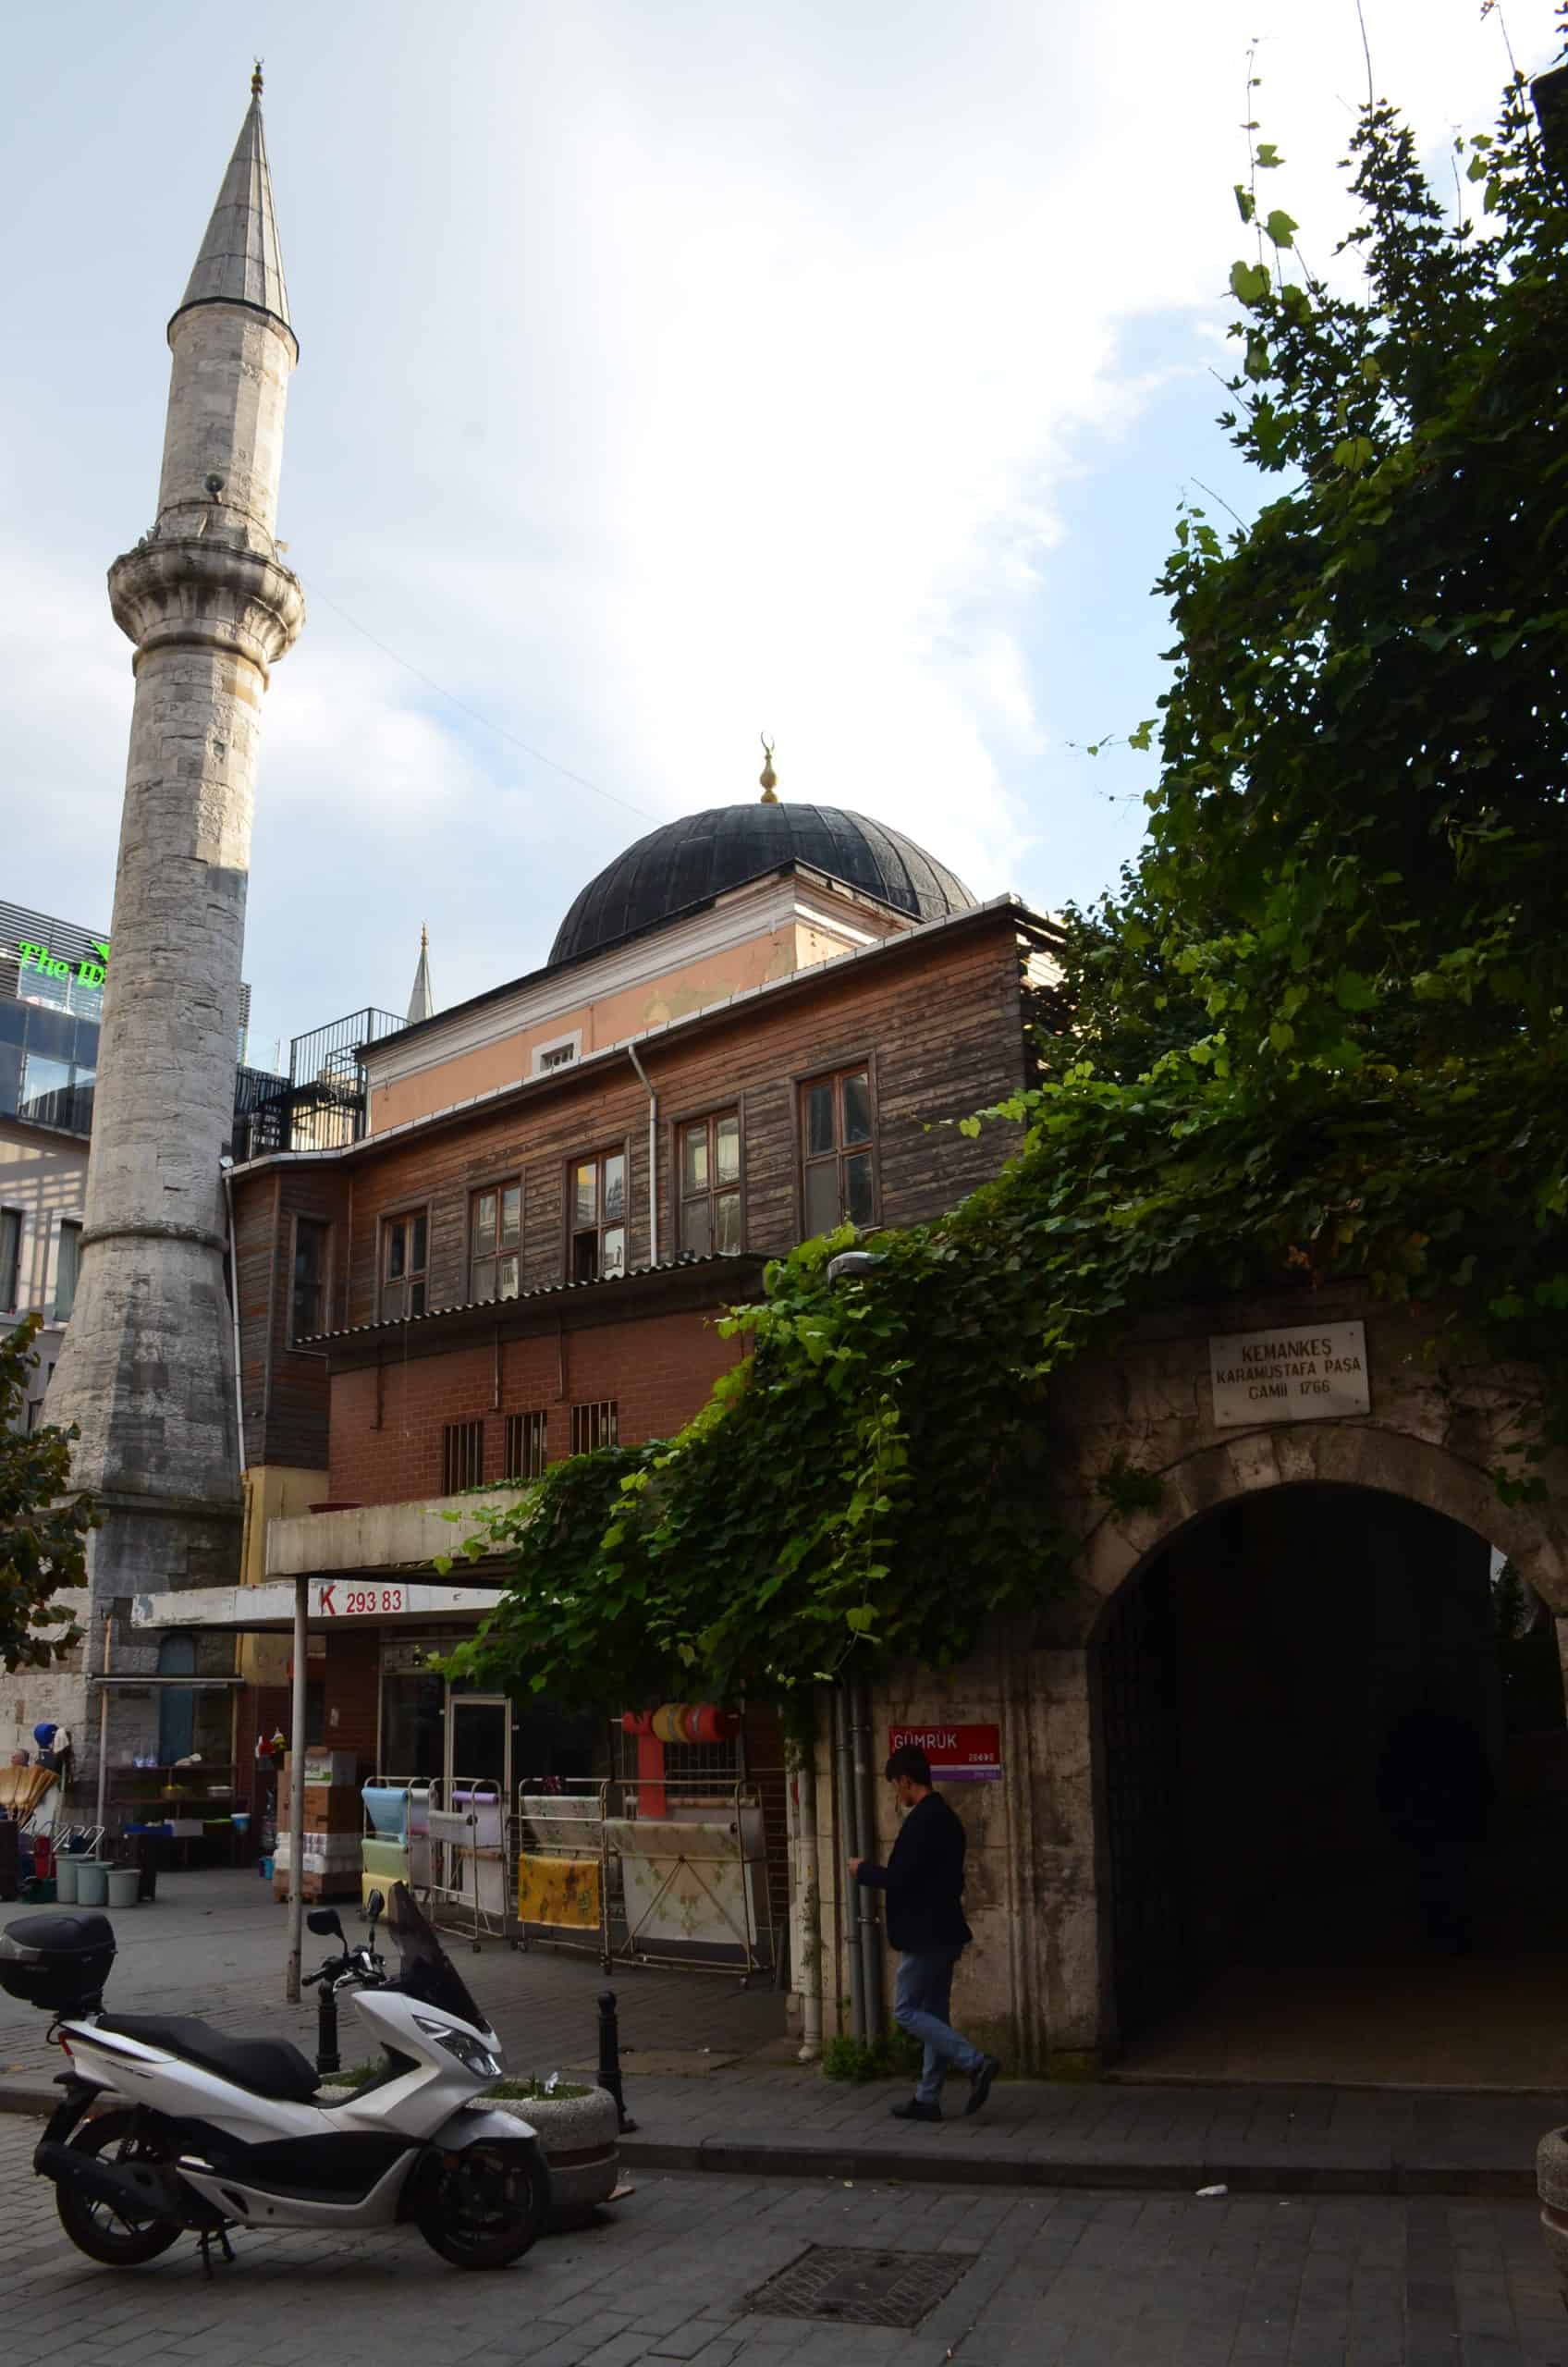 Kemankeş Karamustafa Pasha Mosque